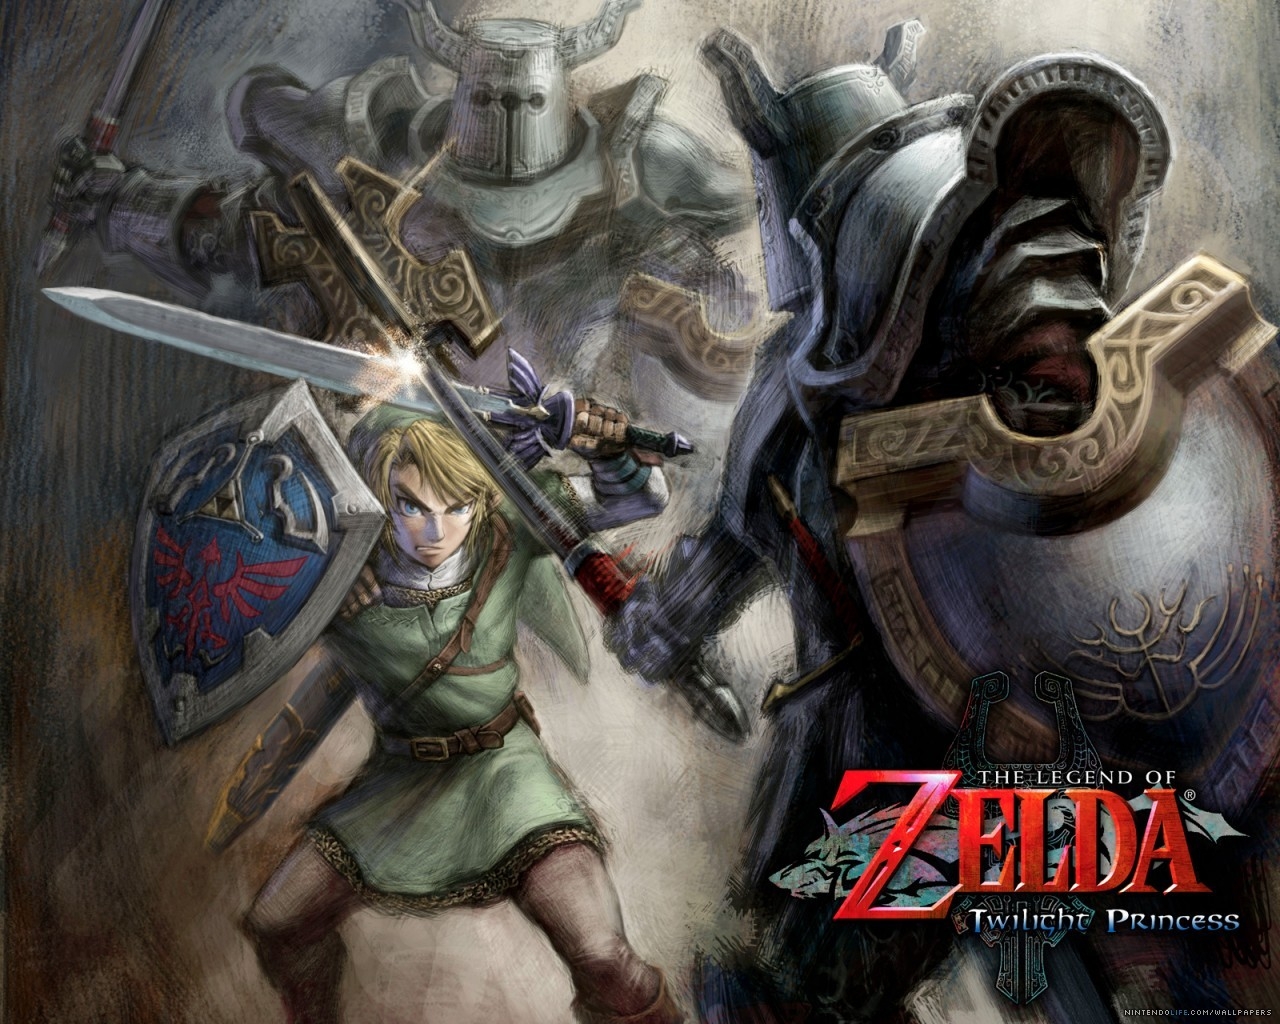 The Legend of Zelda Twilight Princess for 1280 x 1024 resolution